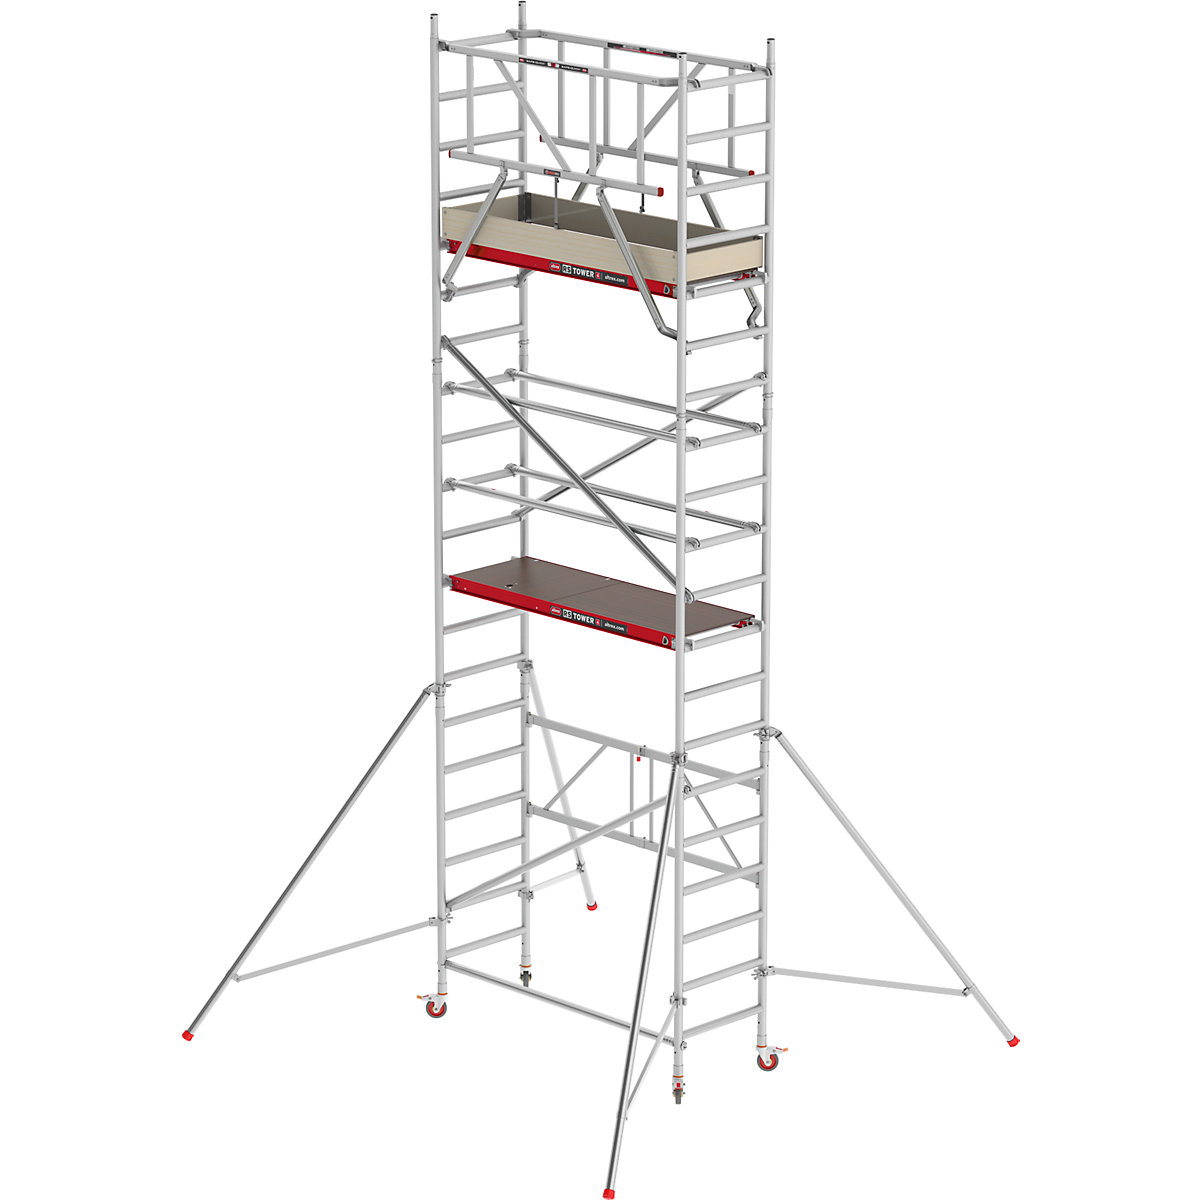 Kamersteiger RS 44-POWER – Altrex, houten platform, lengte 1,85 m, werkhoogte 6,80 m-5